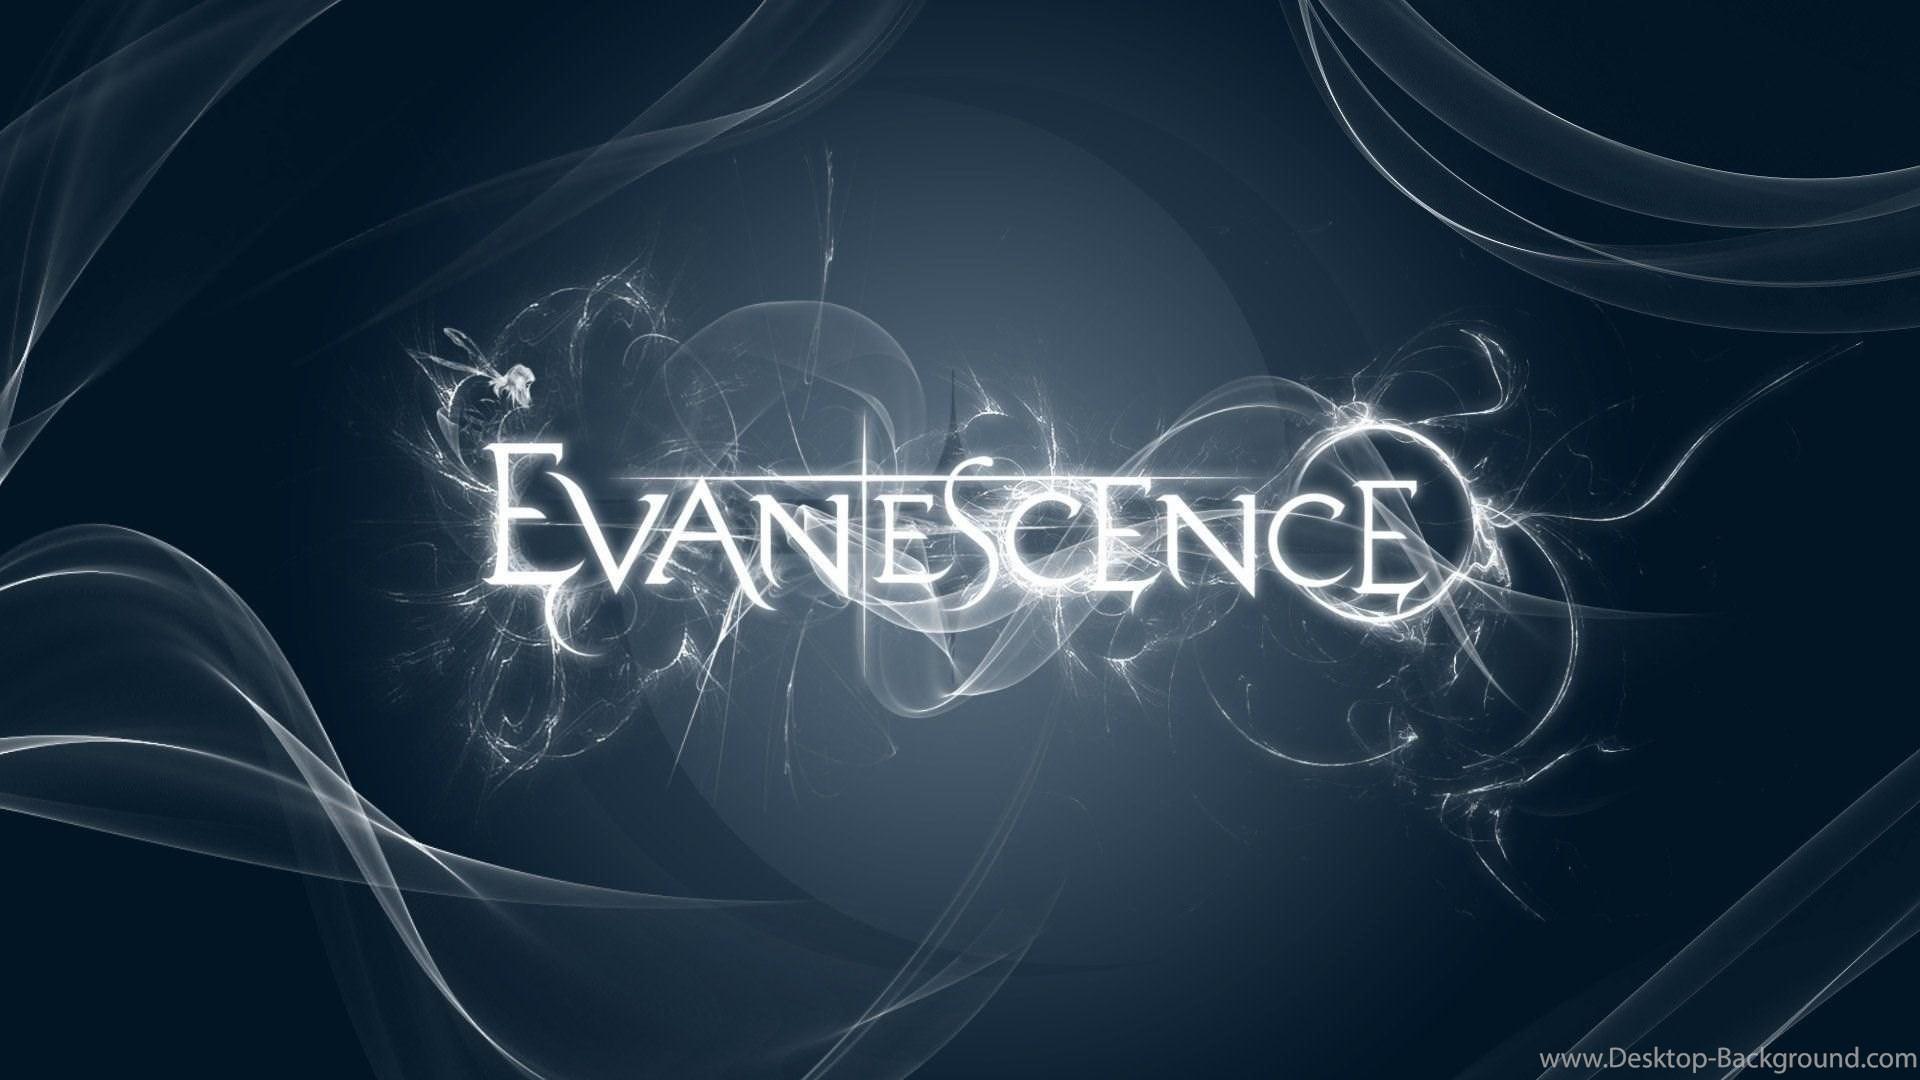 evanescence logo wallpaper